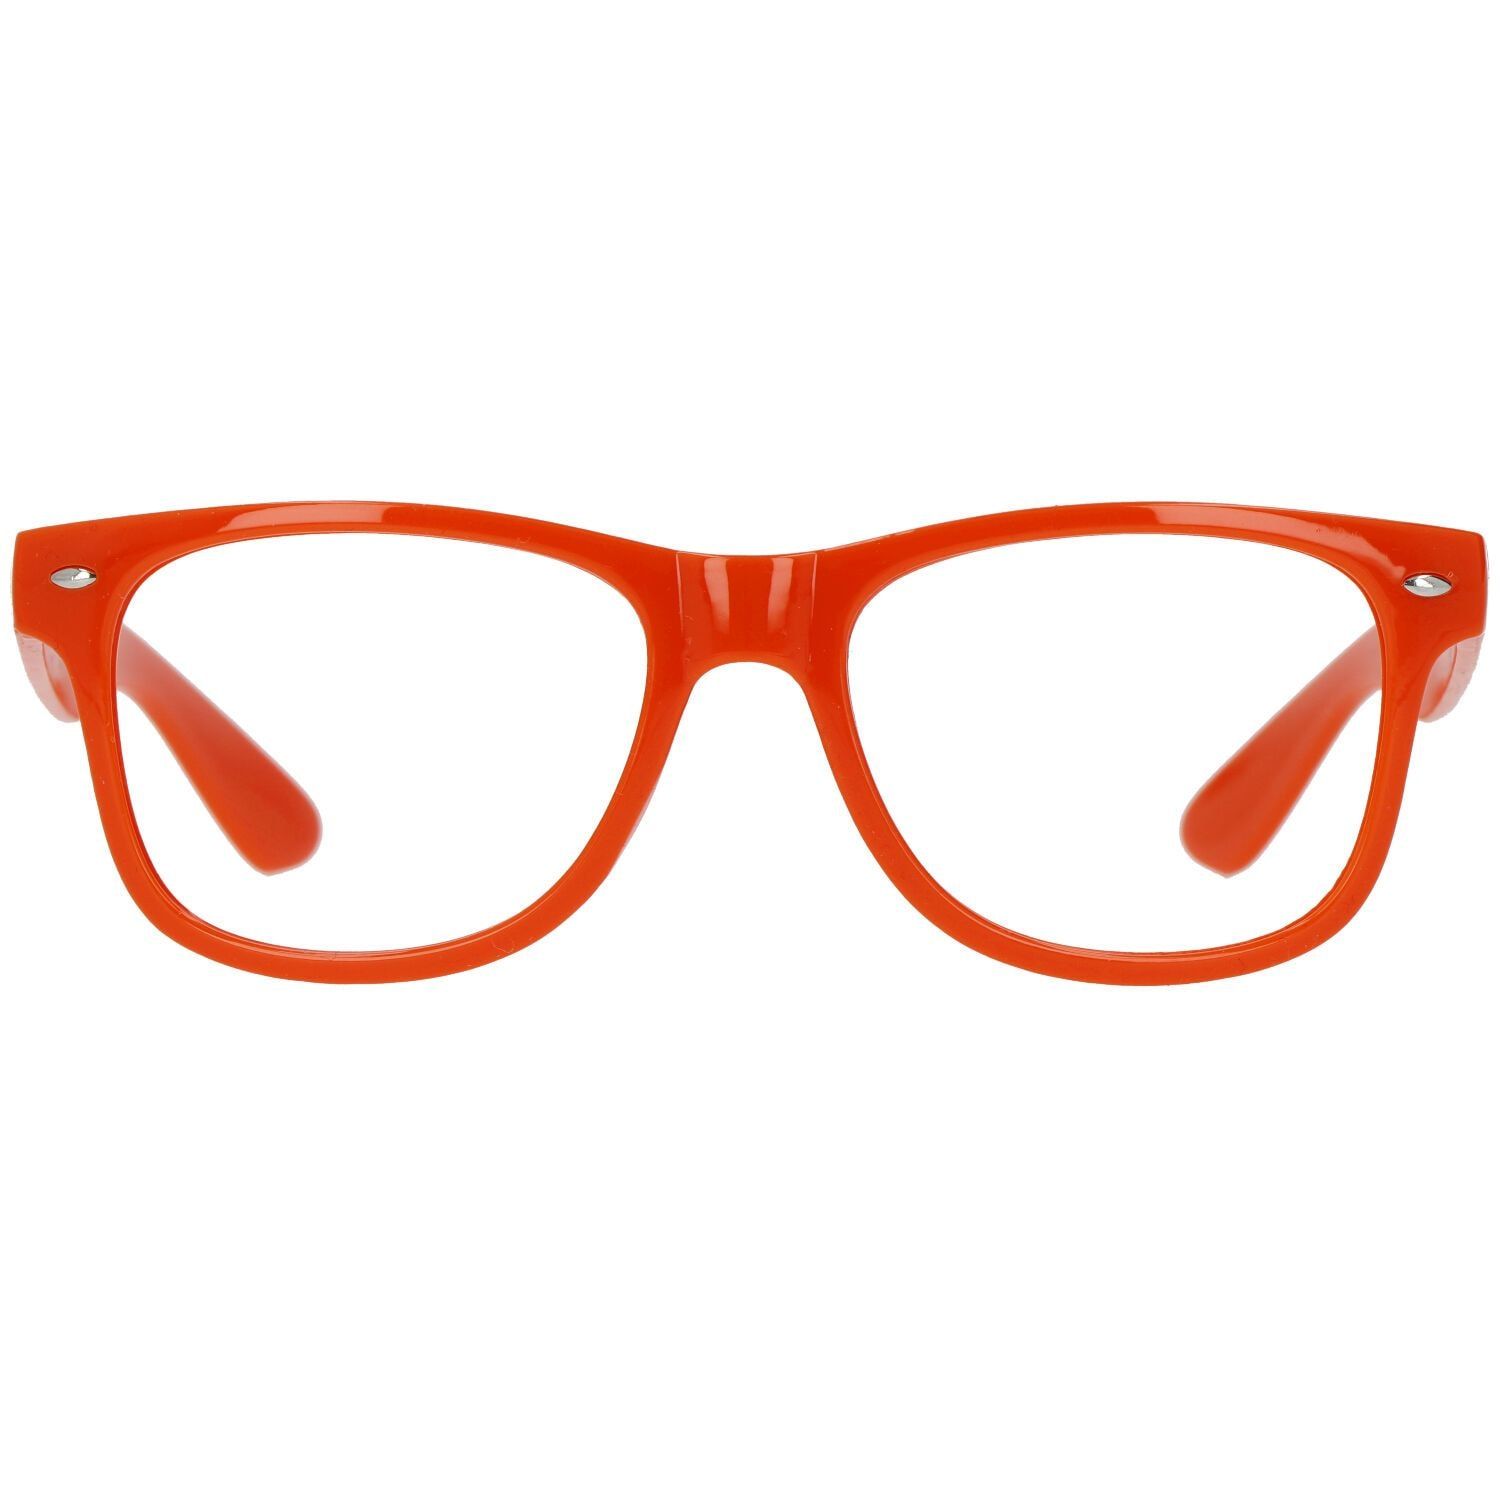 Blues Brothers feestbril neon oranje